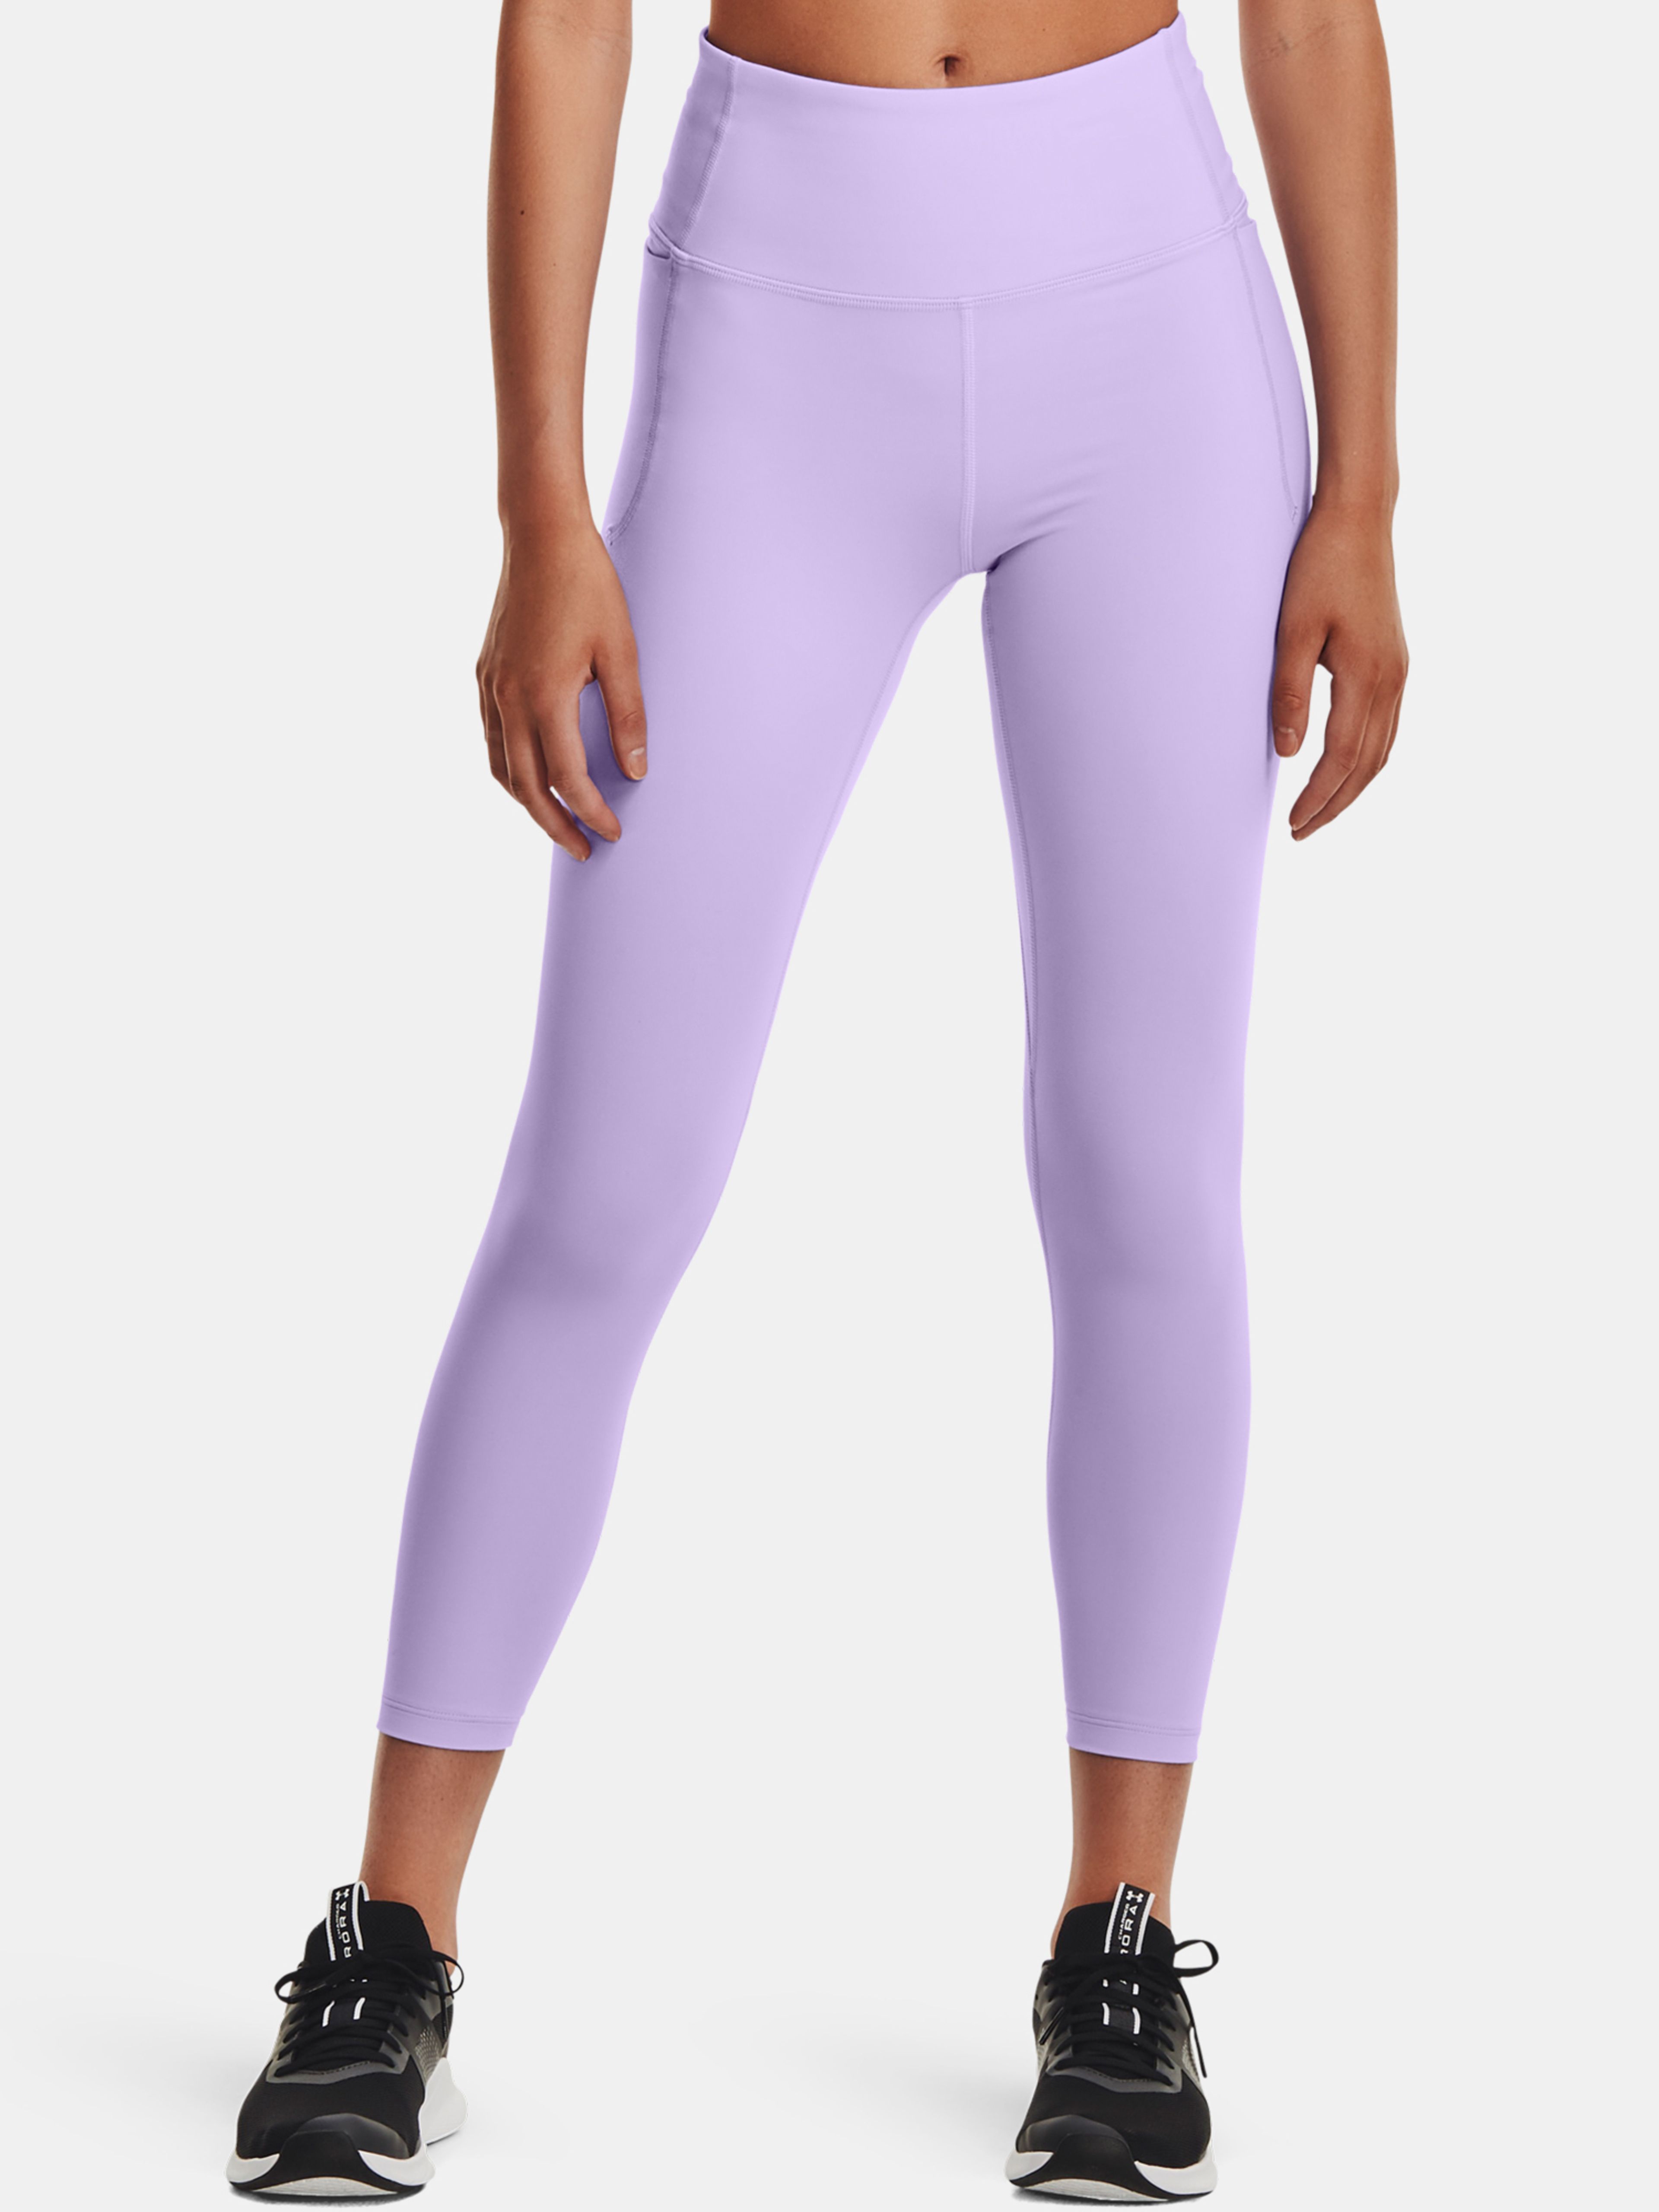  Meridian Ankle Leg, Blue/grey - women's leggings - UNDER  ARMOUR - 46.89 € - outdoorové oblečení a vybavení shop